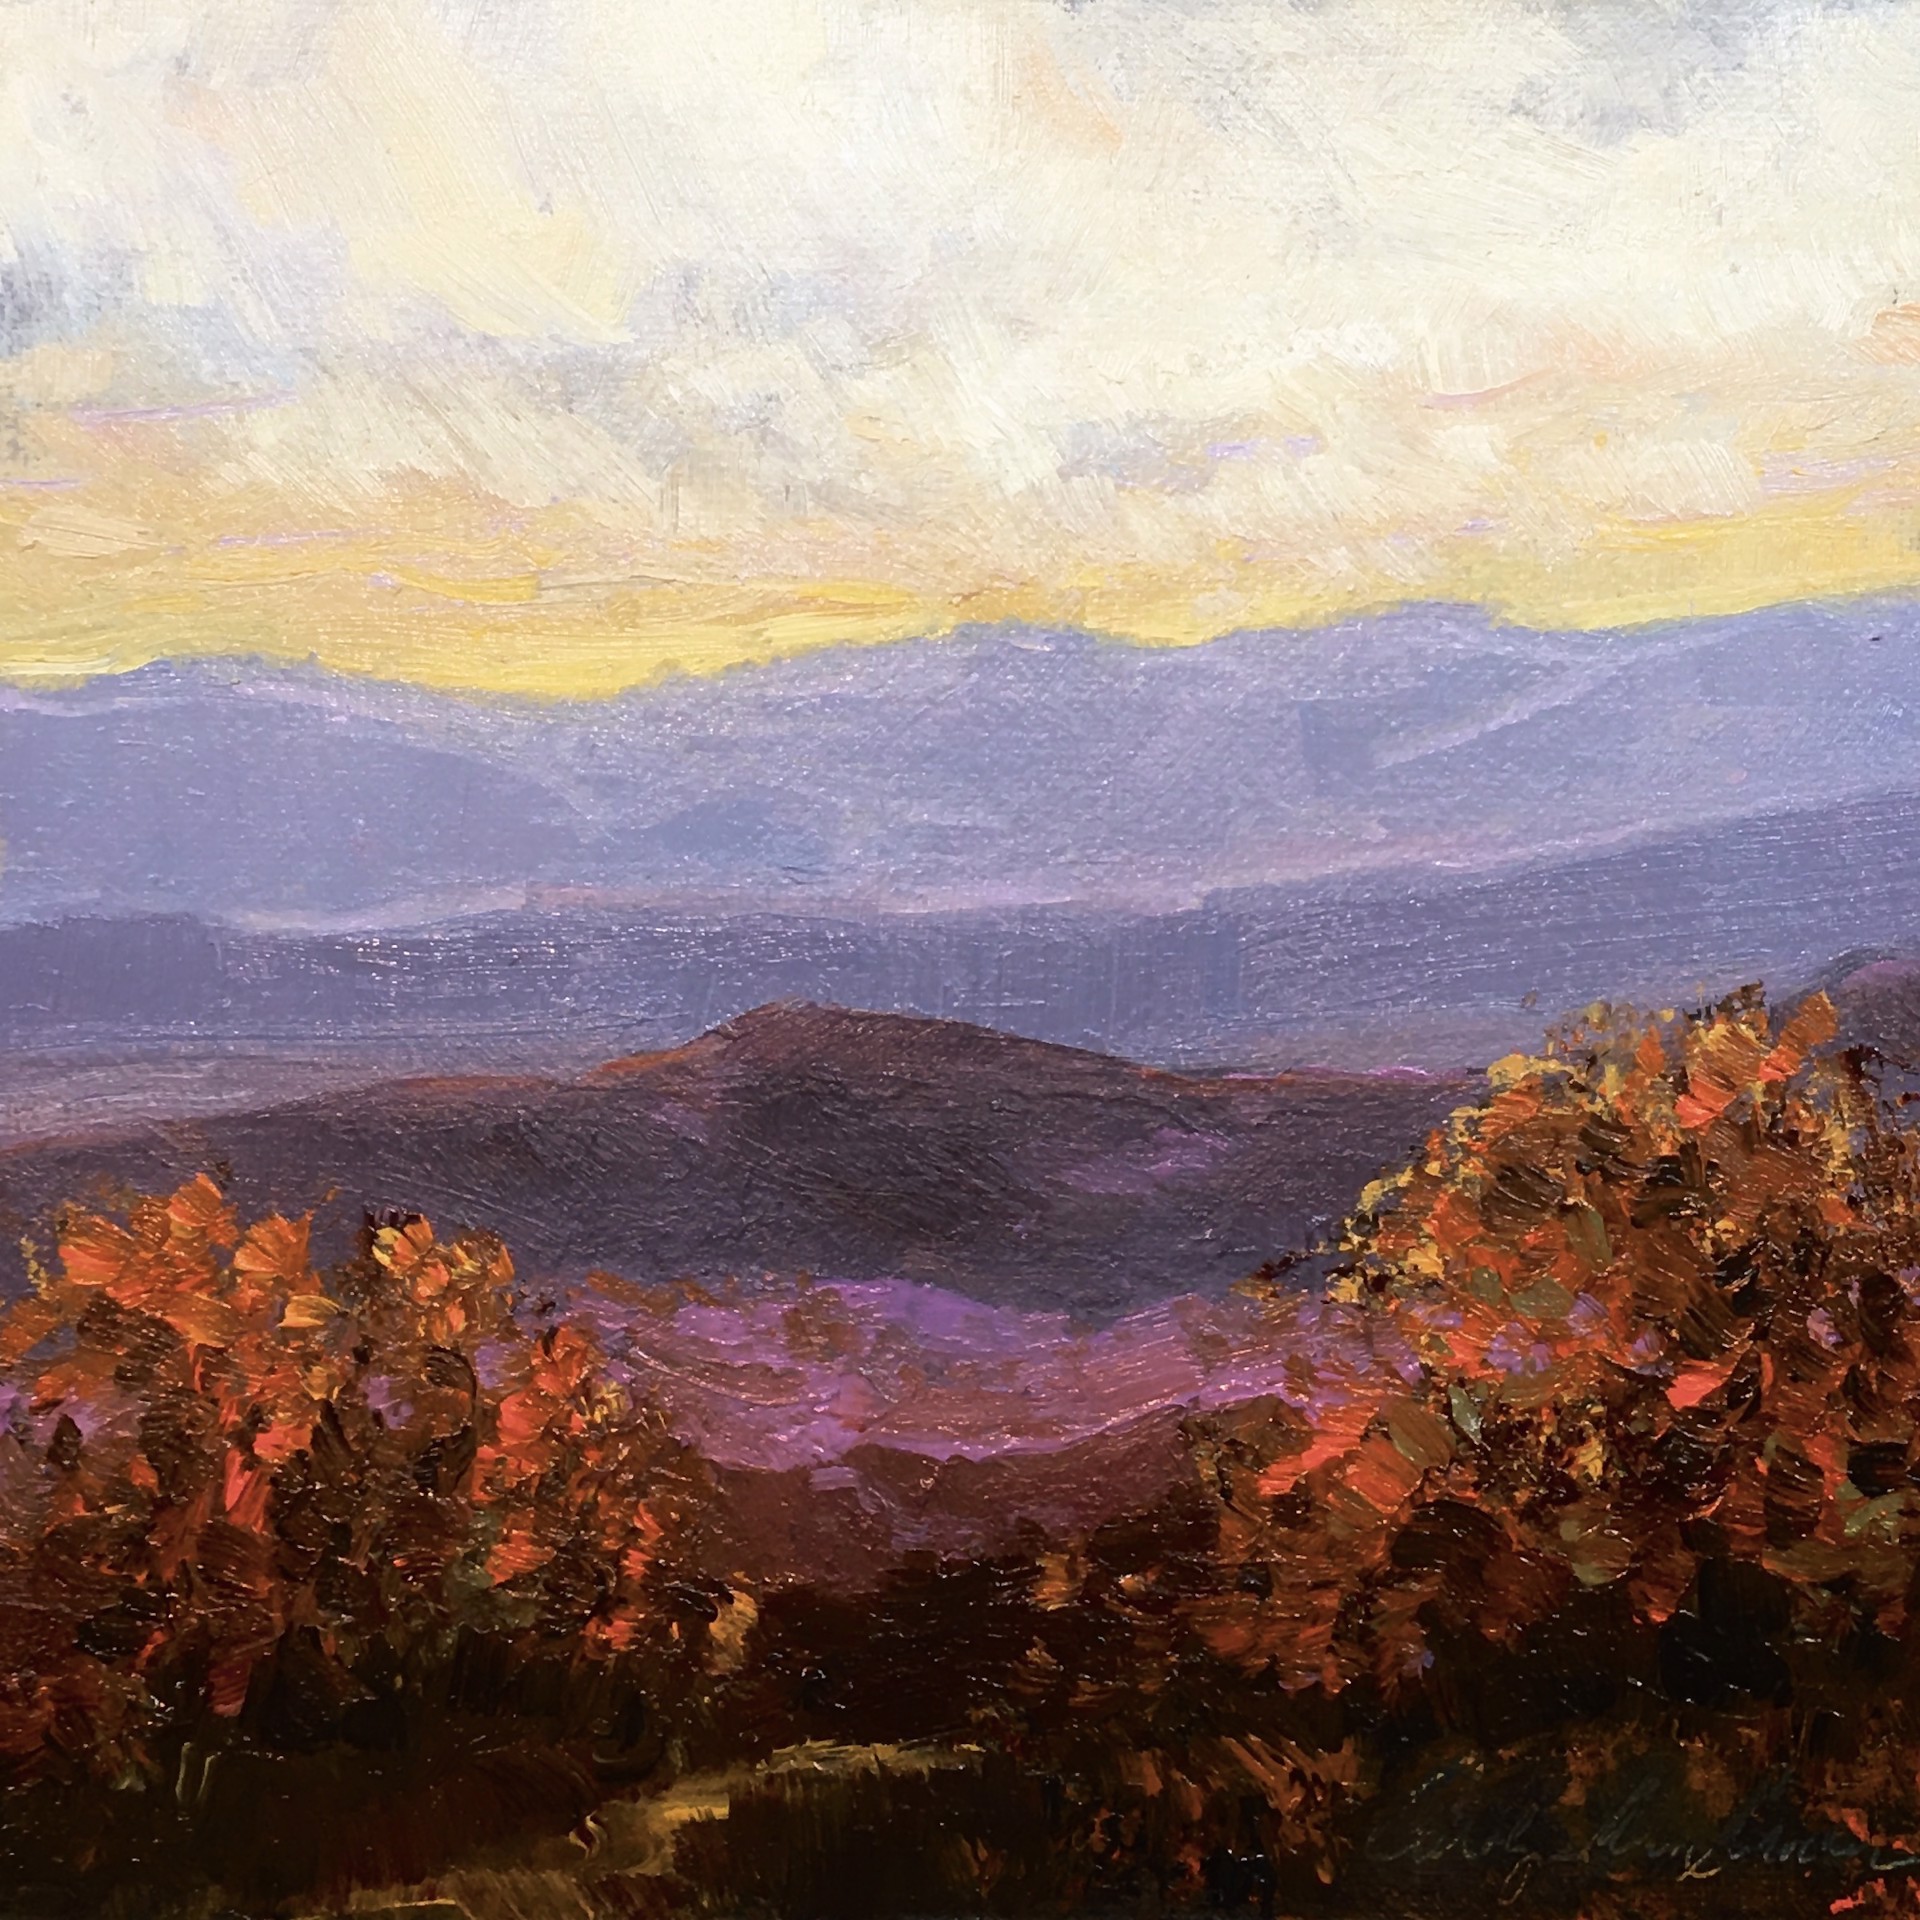 Day's End, Blue Ridge Mtns. by Carolyn Crocker (Rue)